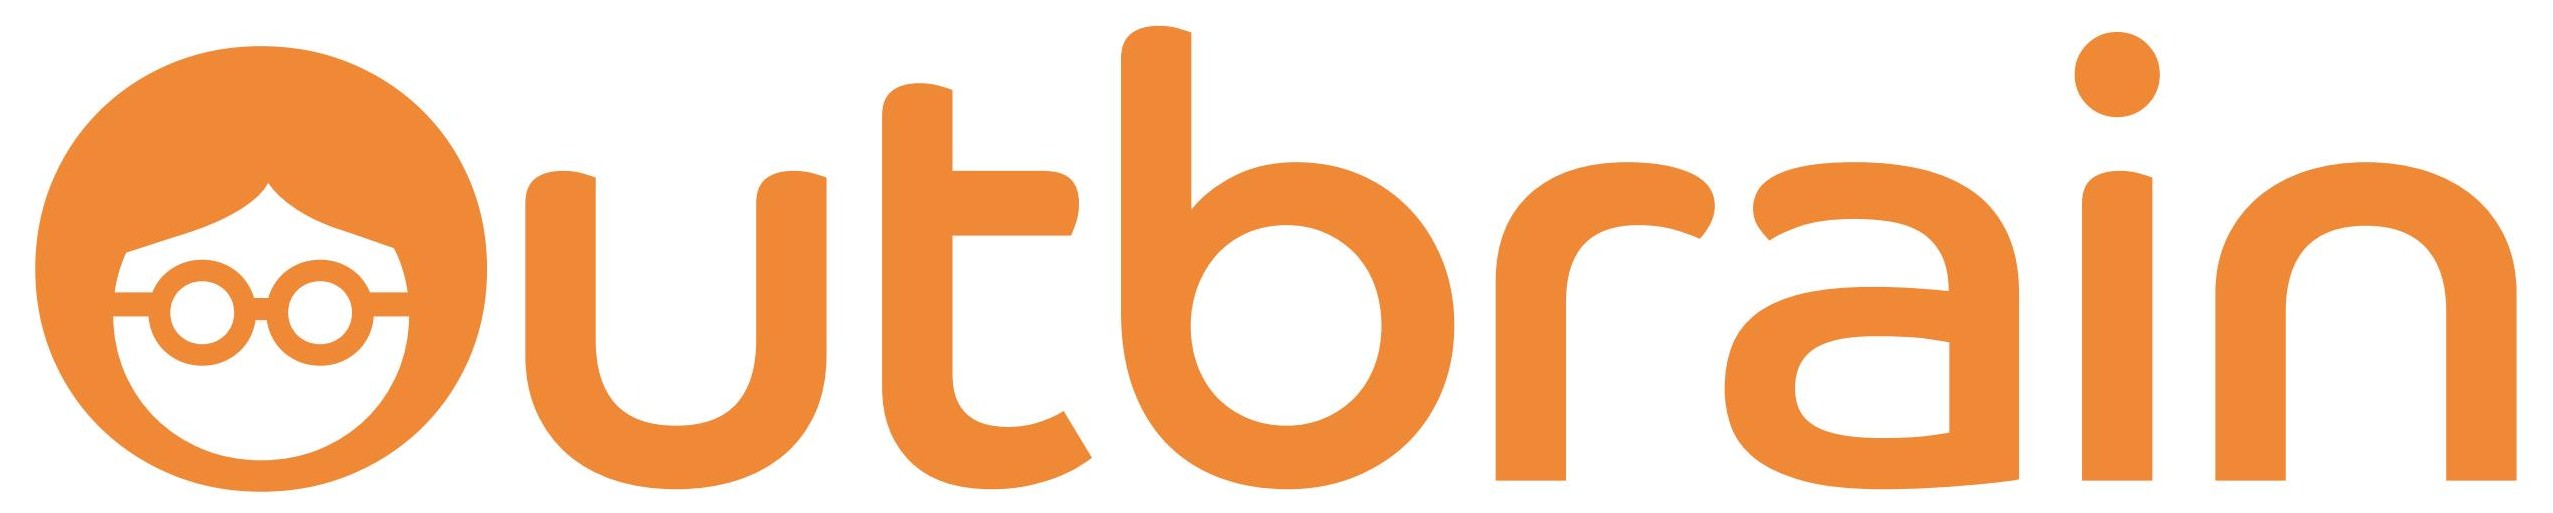 outbrain logo 05